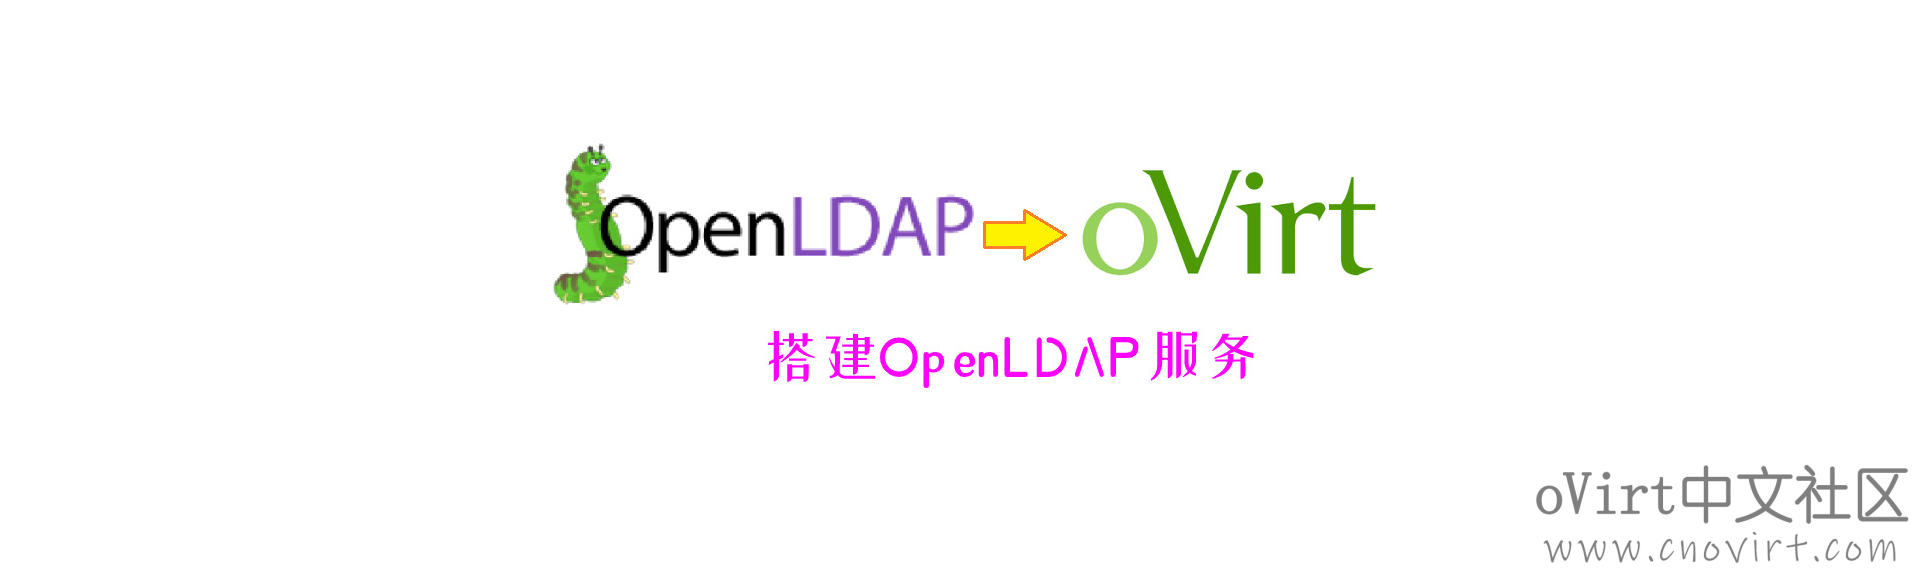 ovirt-engine 接管外部LDAP用户（一）: 搭建OpenLDAP服务